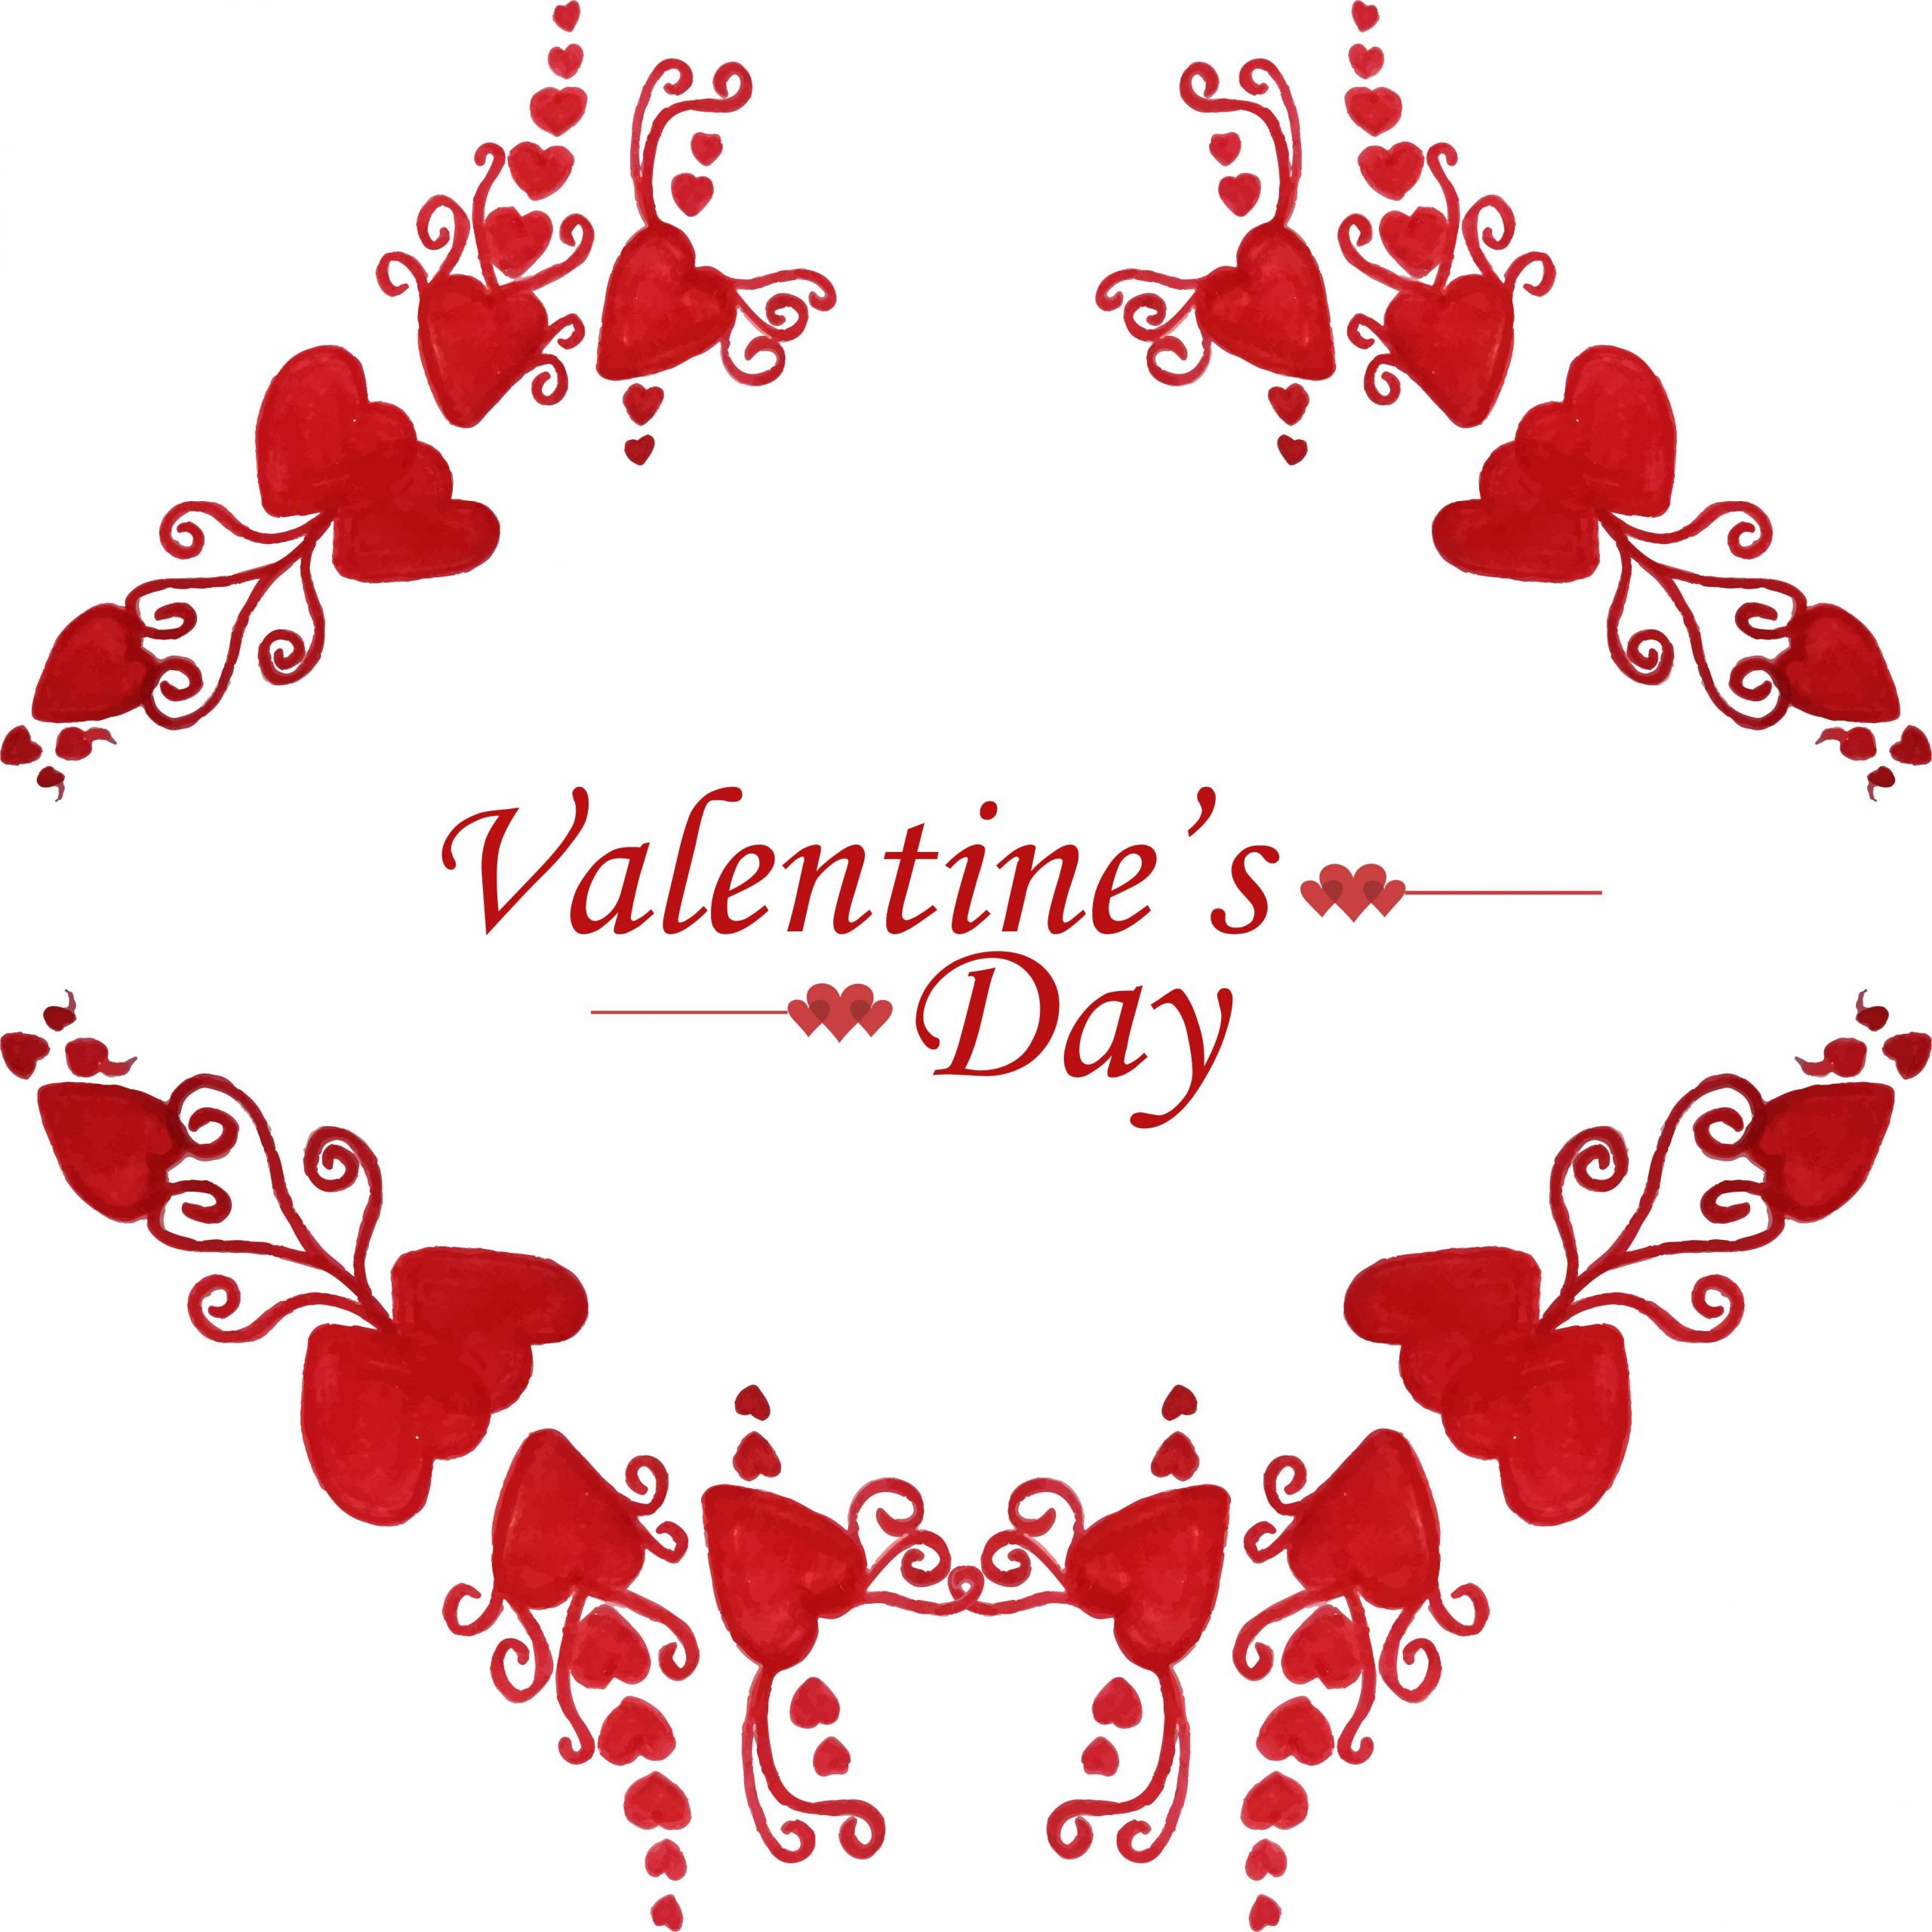 Valentines Day Card Design Inspirational Beautiful Valentine S Day Card Design Vector Art at